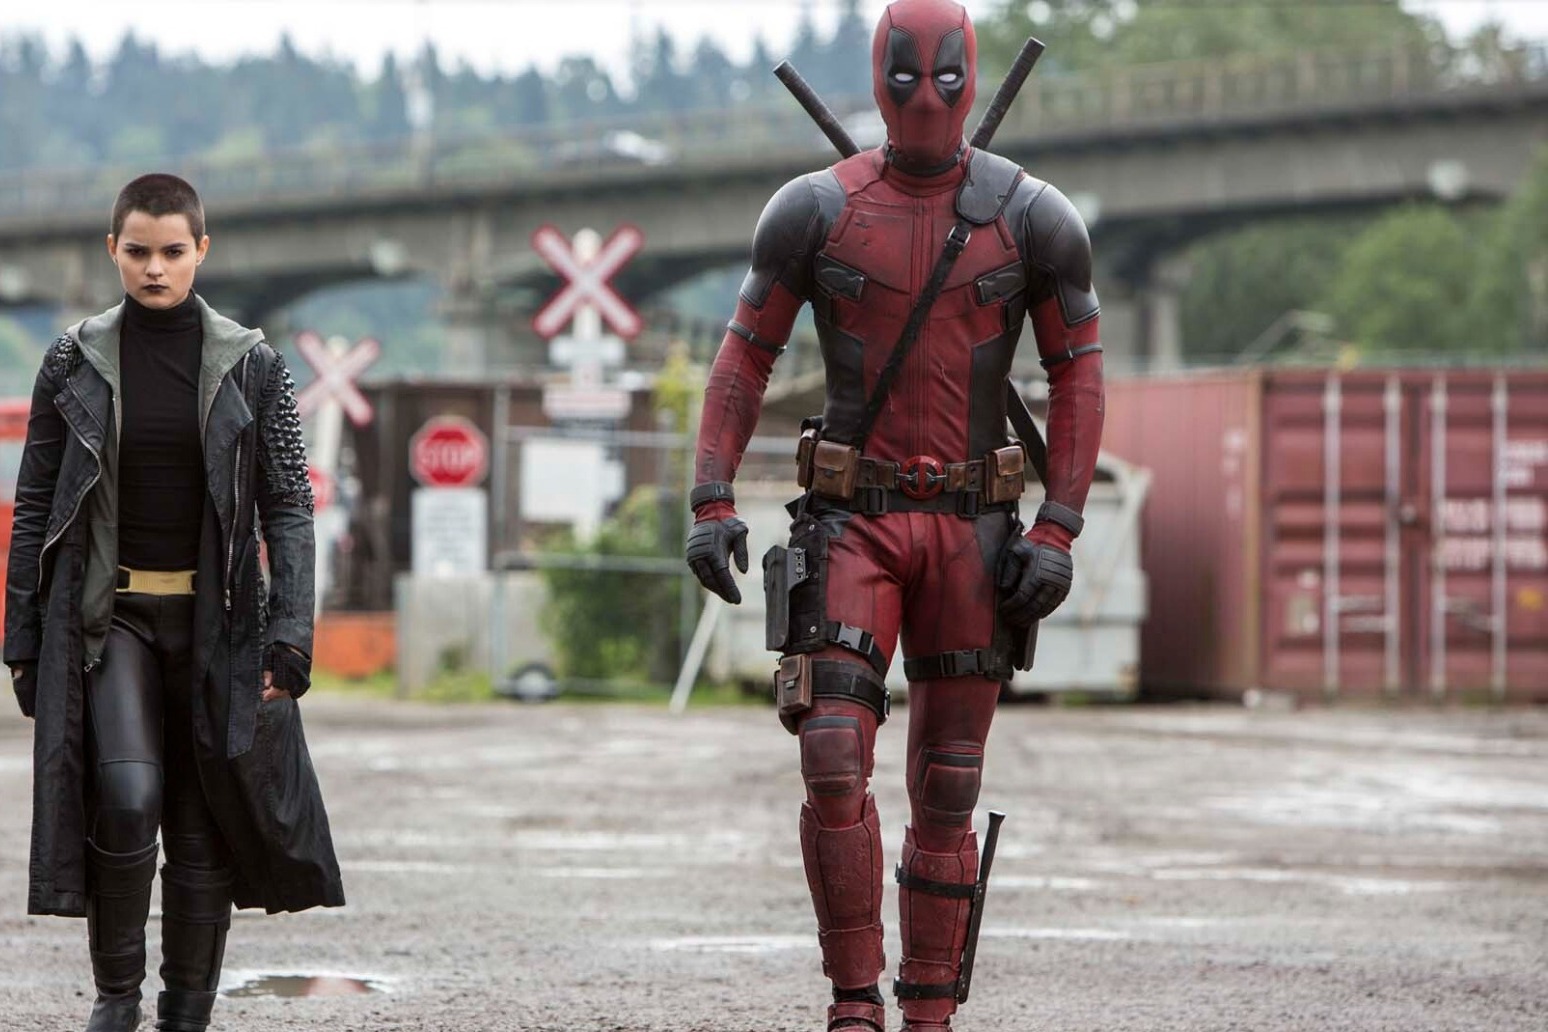 Ryan Reynolds confirms director Shawn Levy on board for Deadpool III